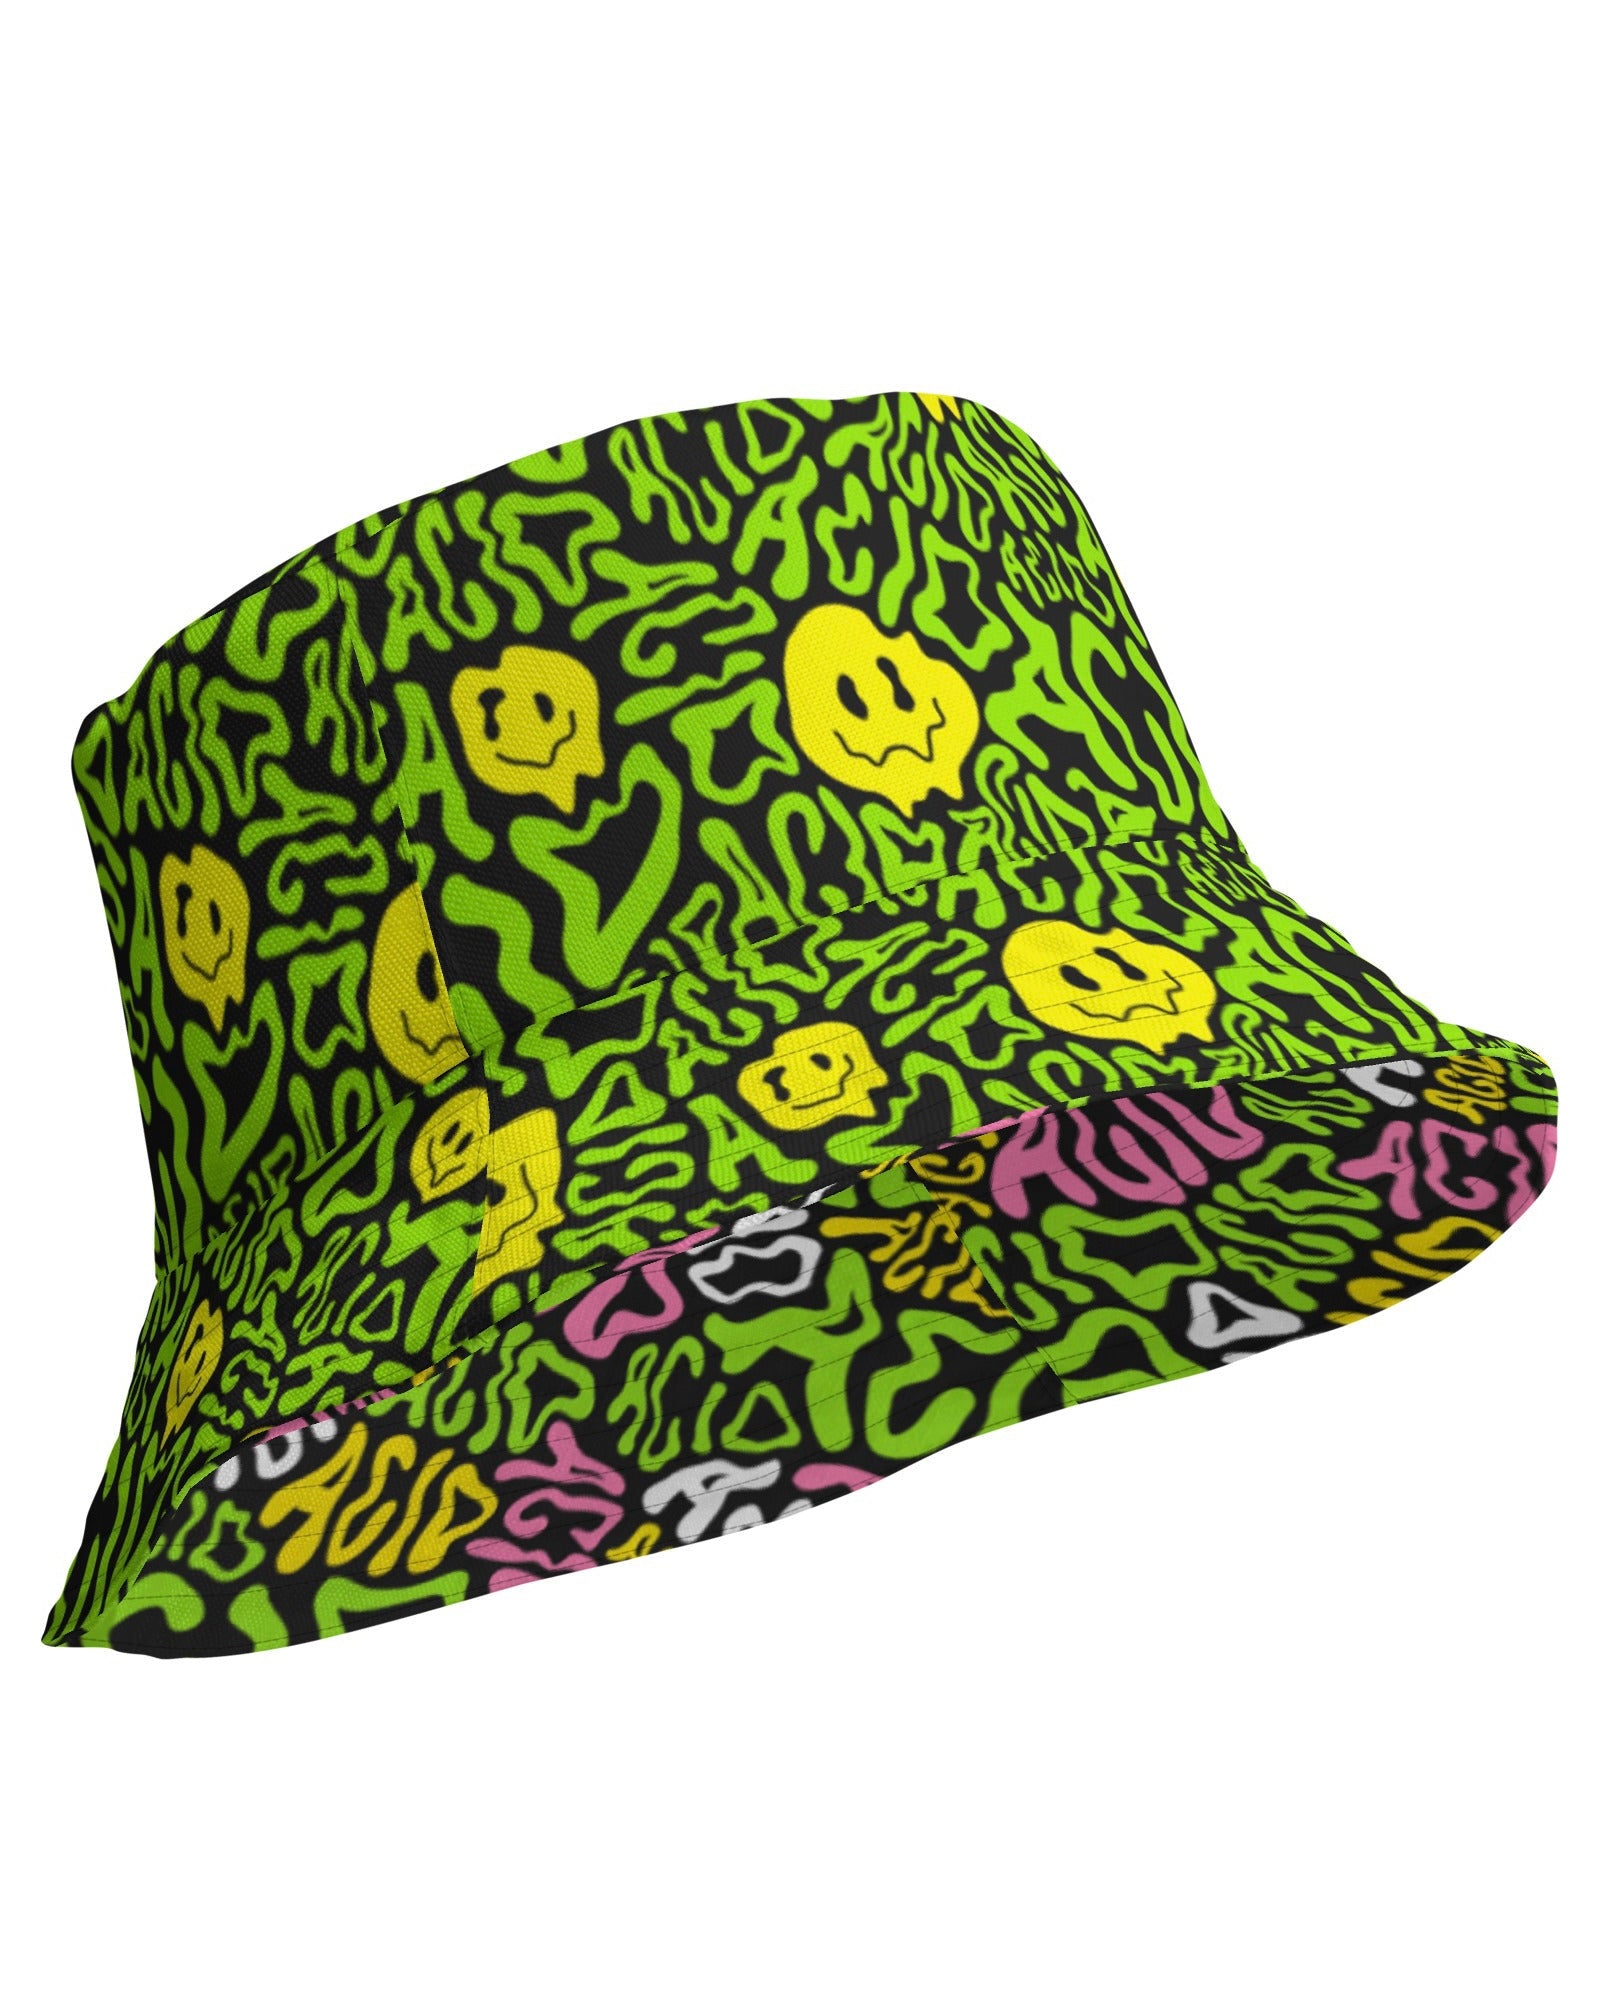 Acid Smilez / Candy Acid Reversible Bucket Hat, Bucket Hat, - One Stop Rave